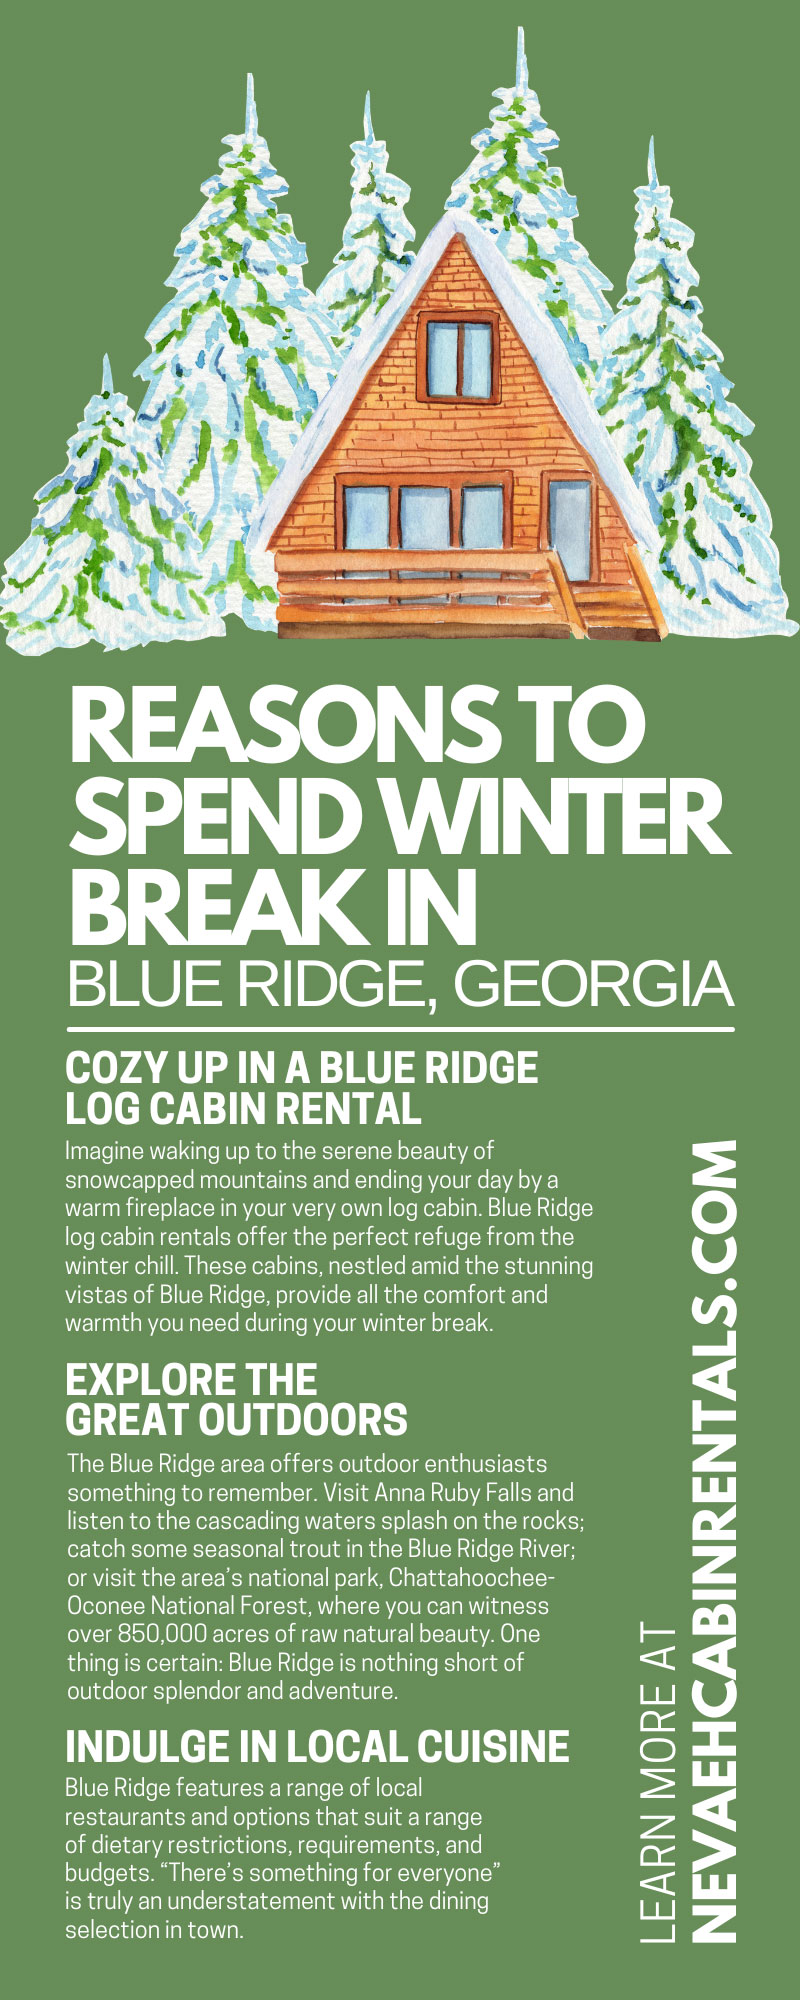 8 Reasons To Spend Winter Break in Blue Ridge, Georgia
